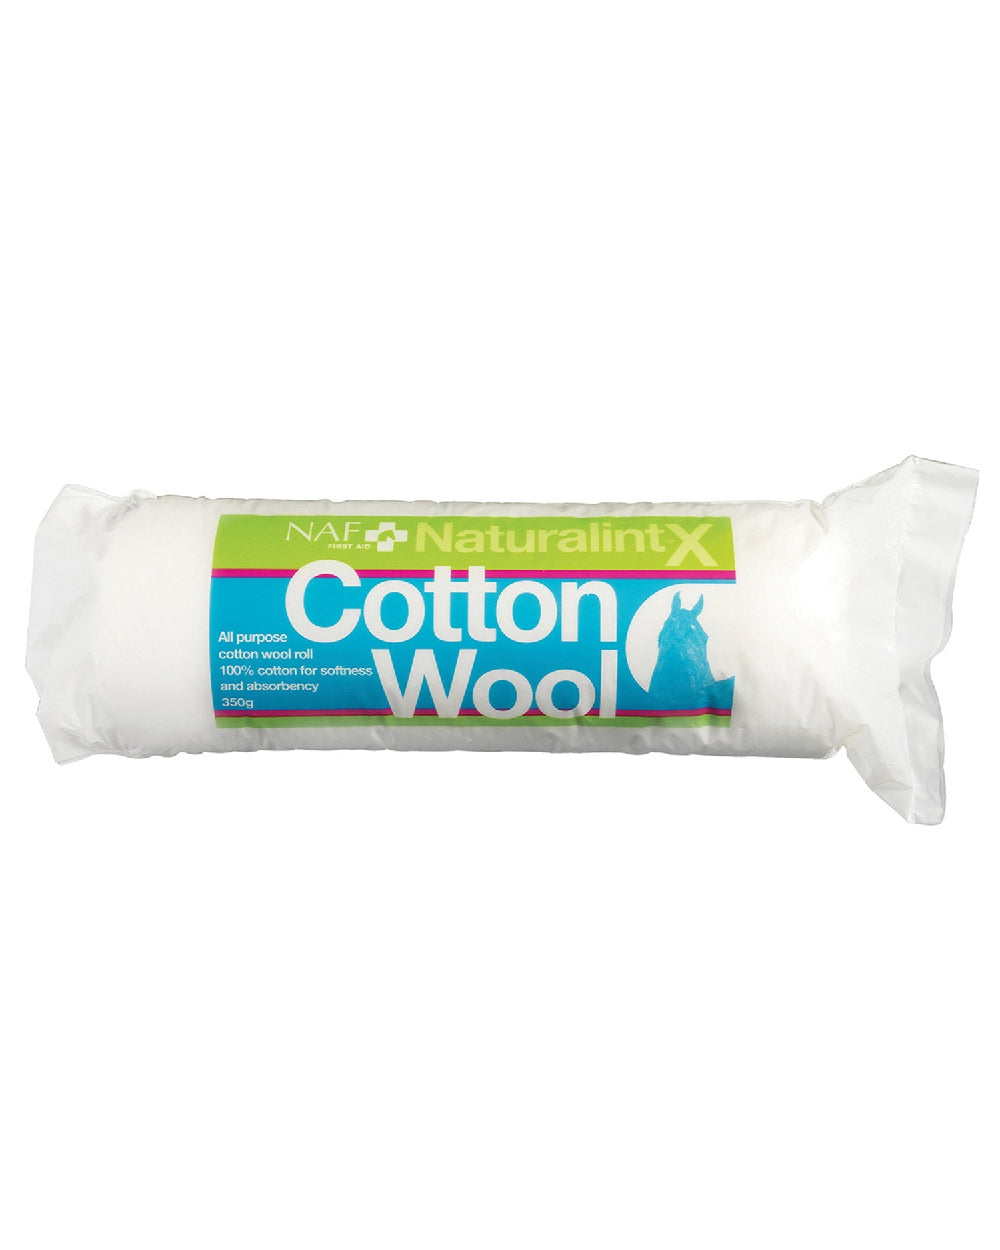 NAF Naturalintx Cotton Wool on white background